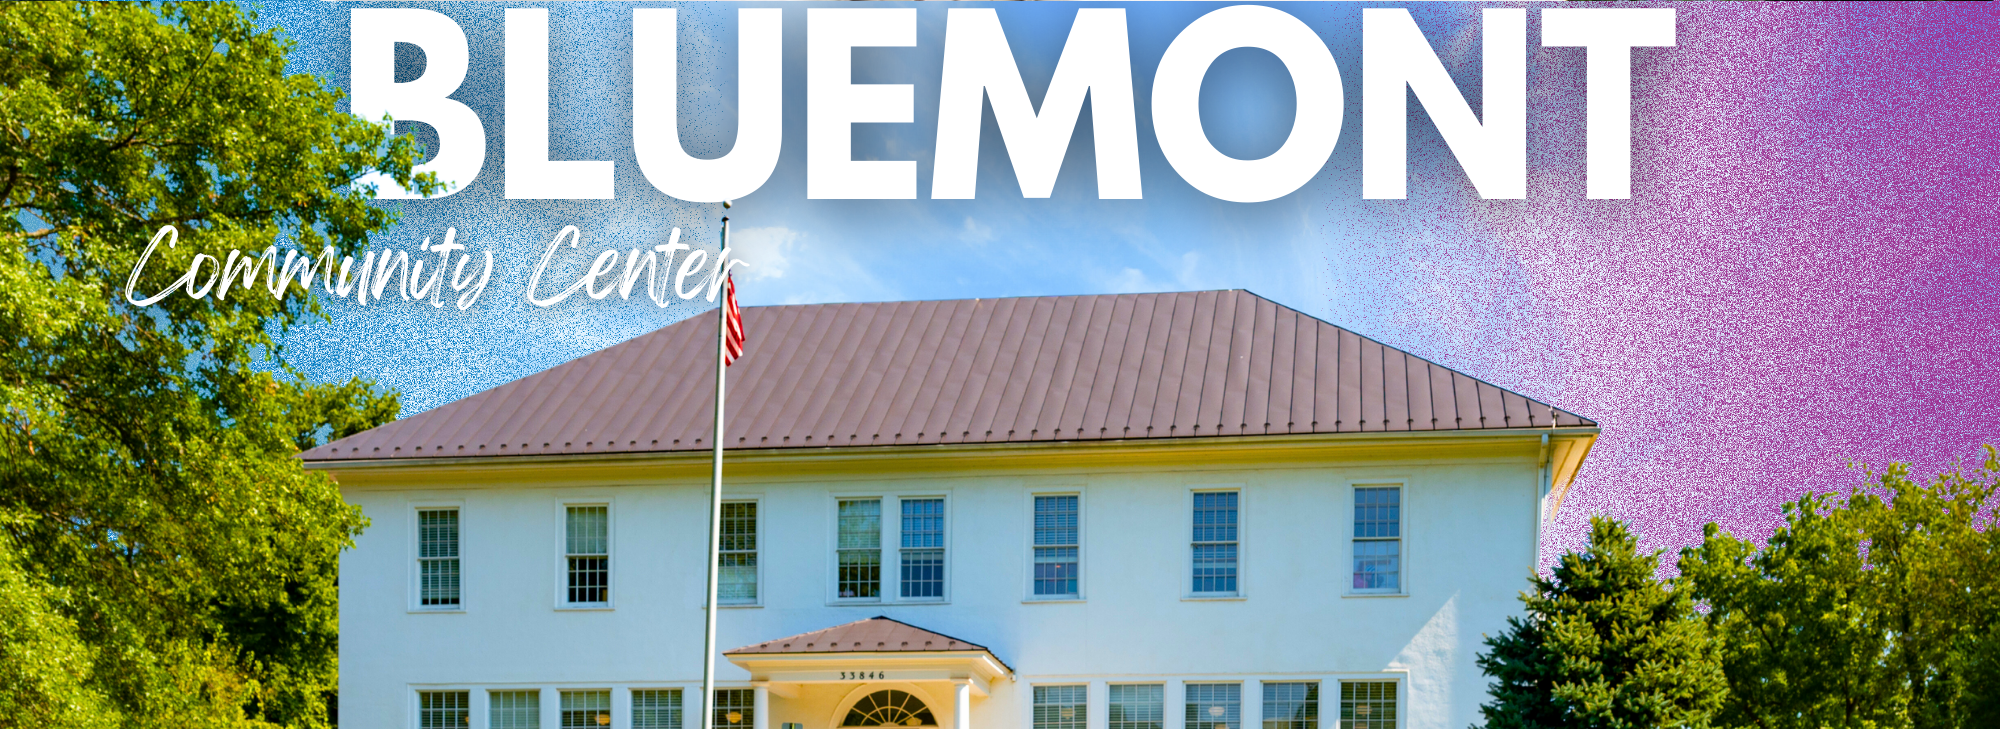 Bluemont Community Center